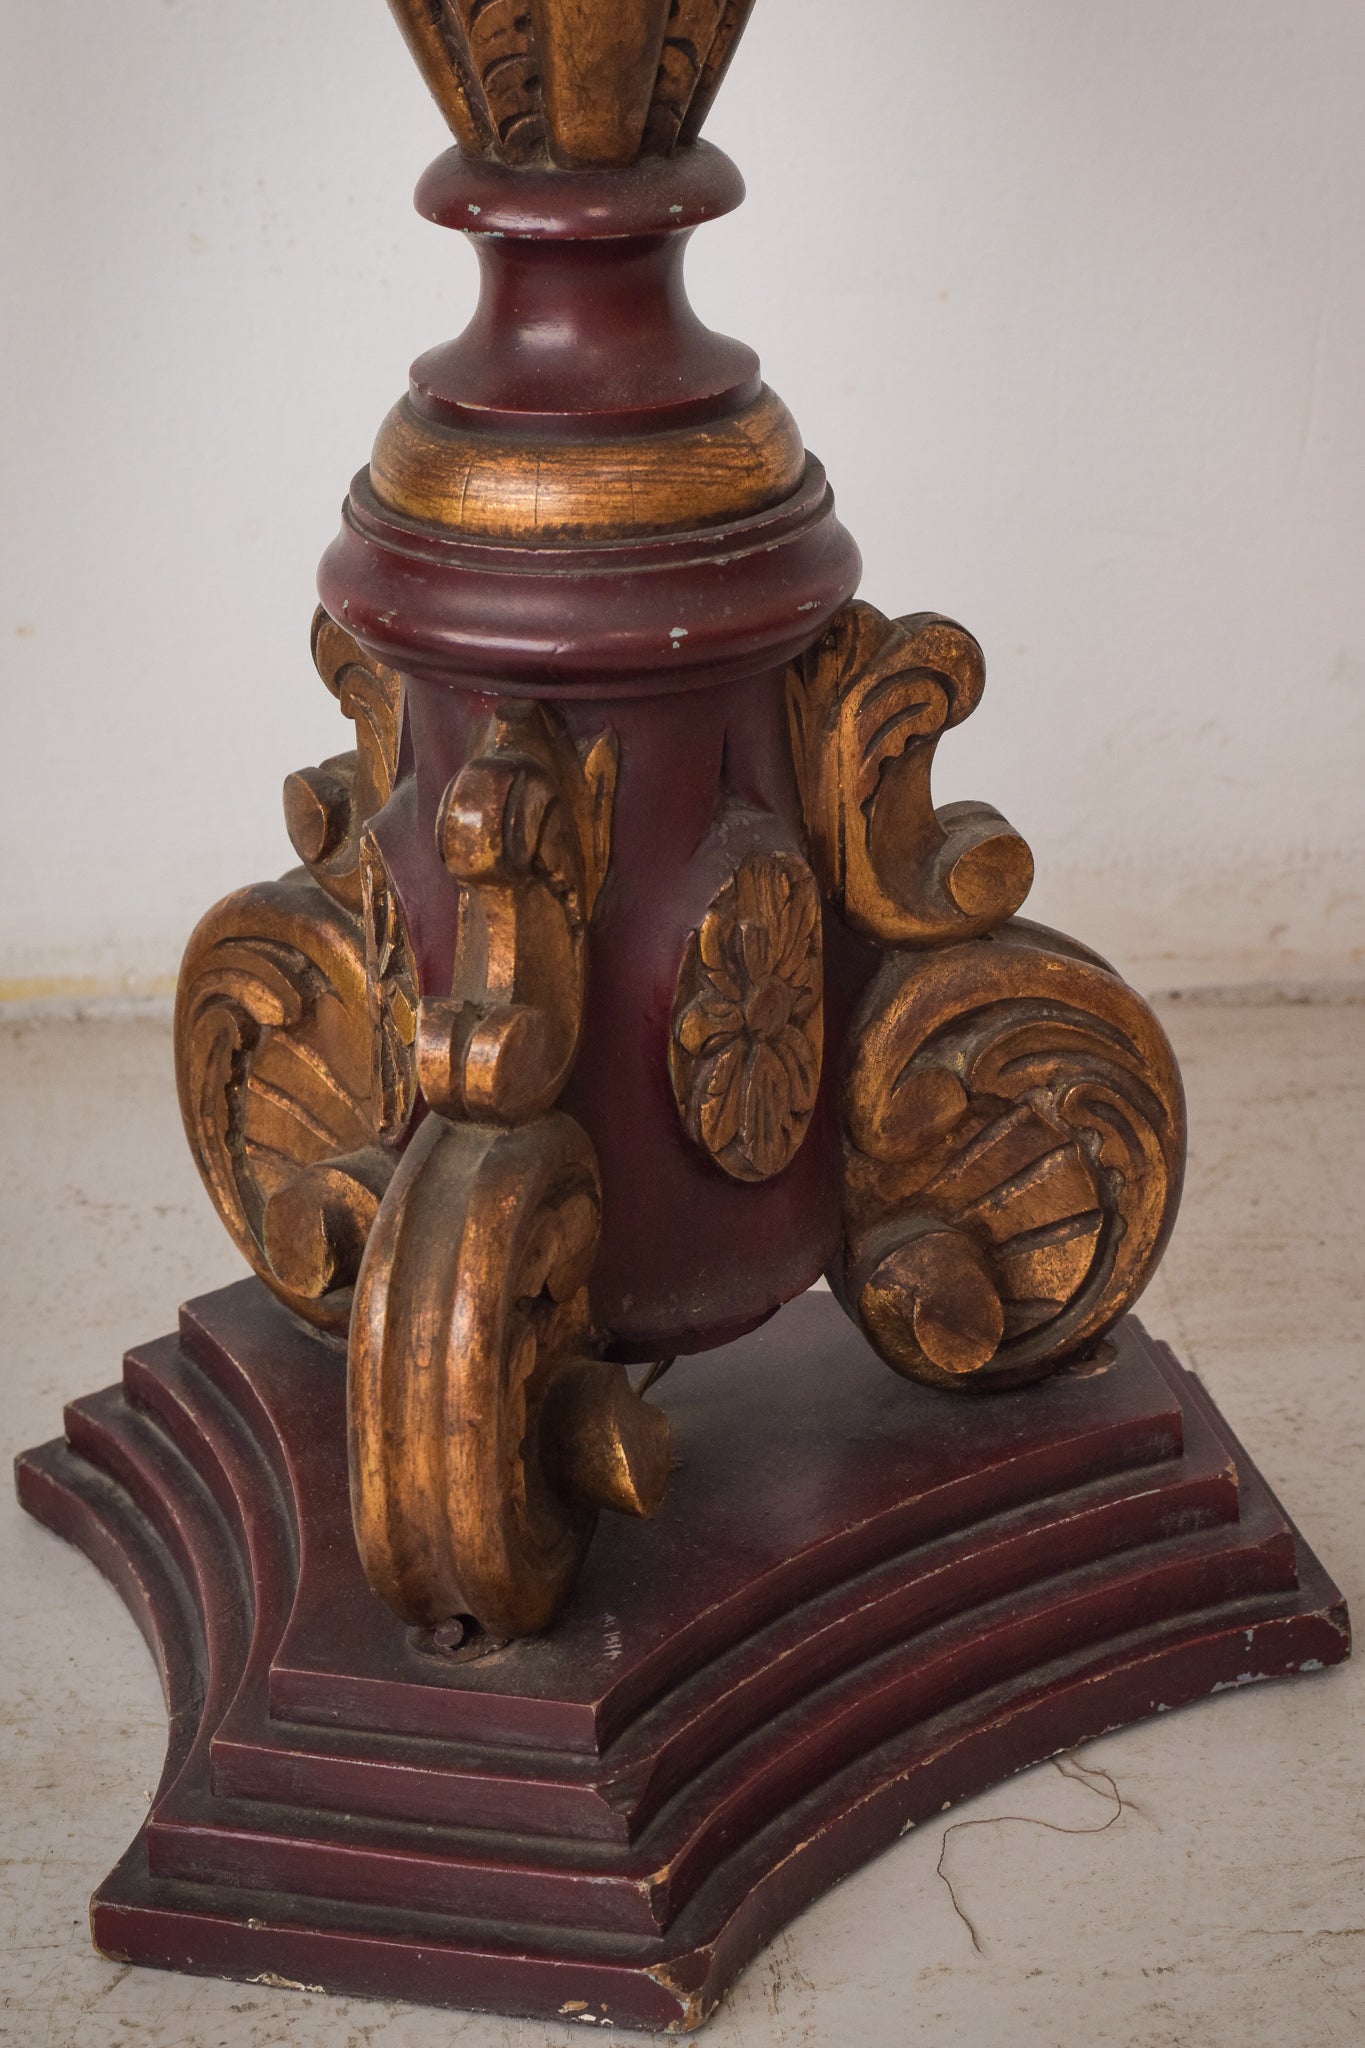 Two - Vintage Carved Wooden Standard Lamps